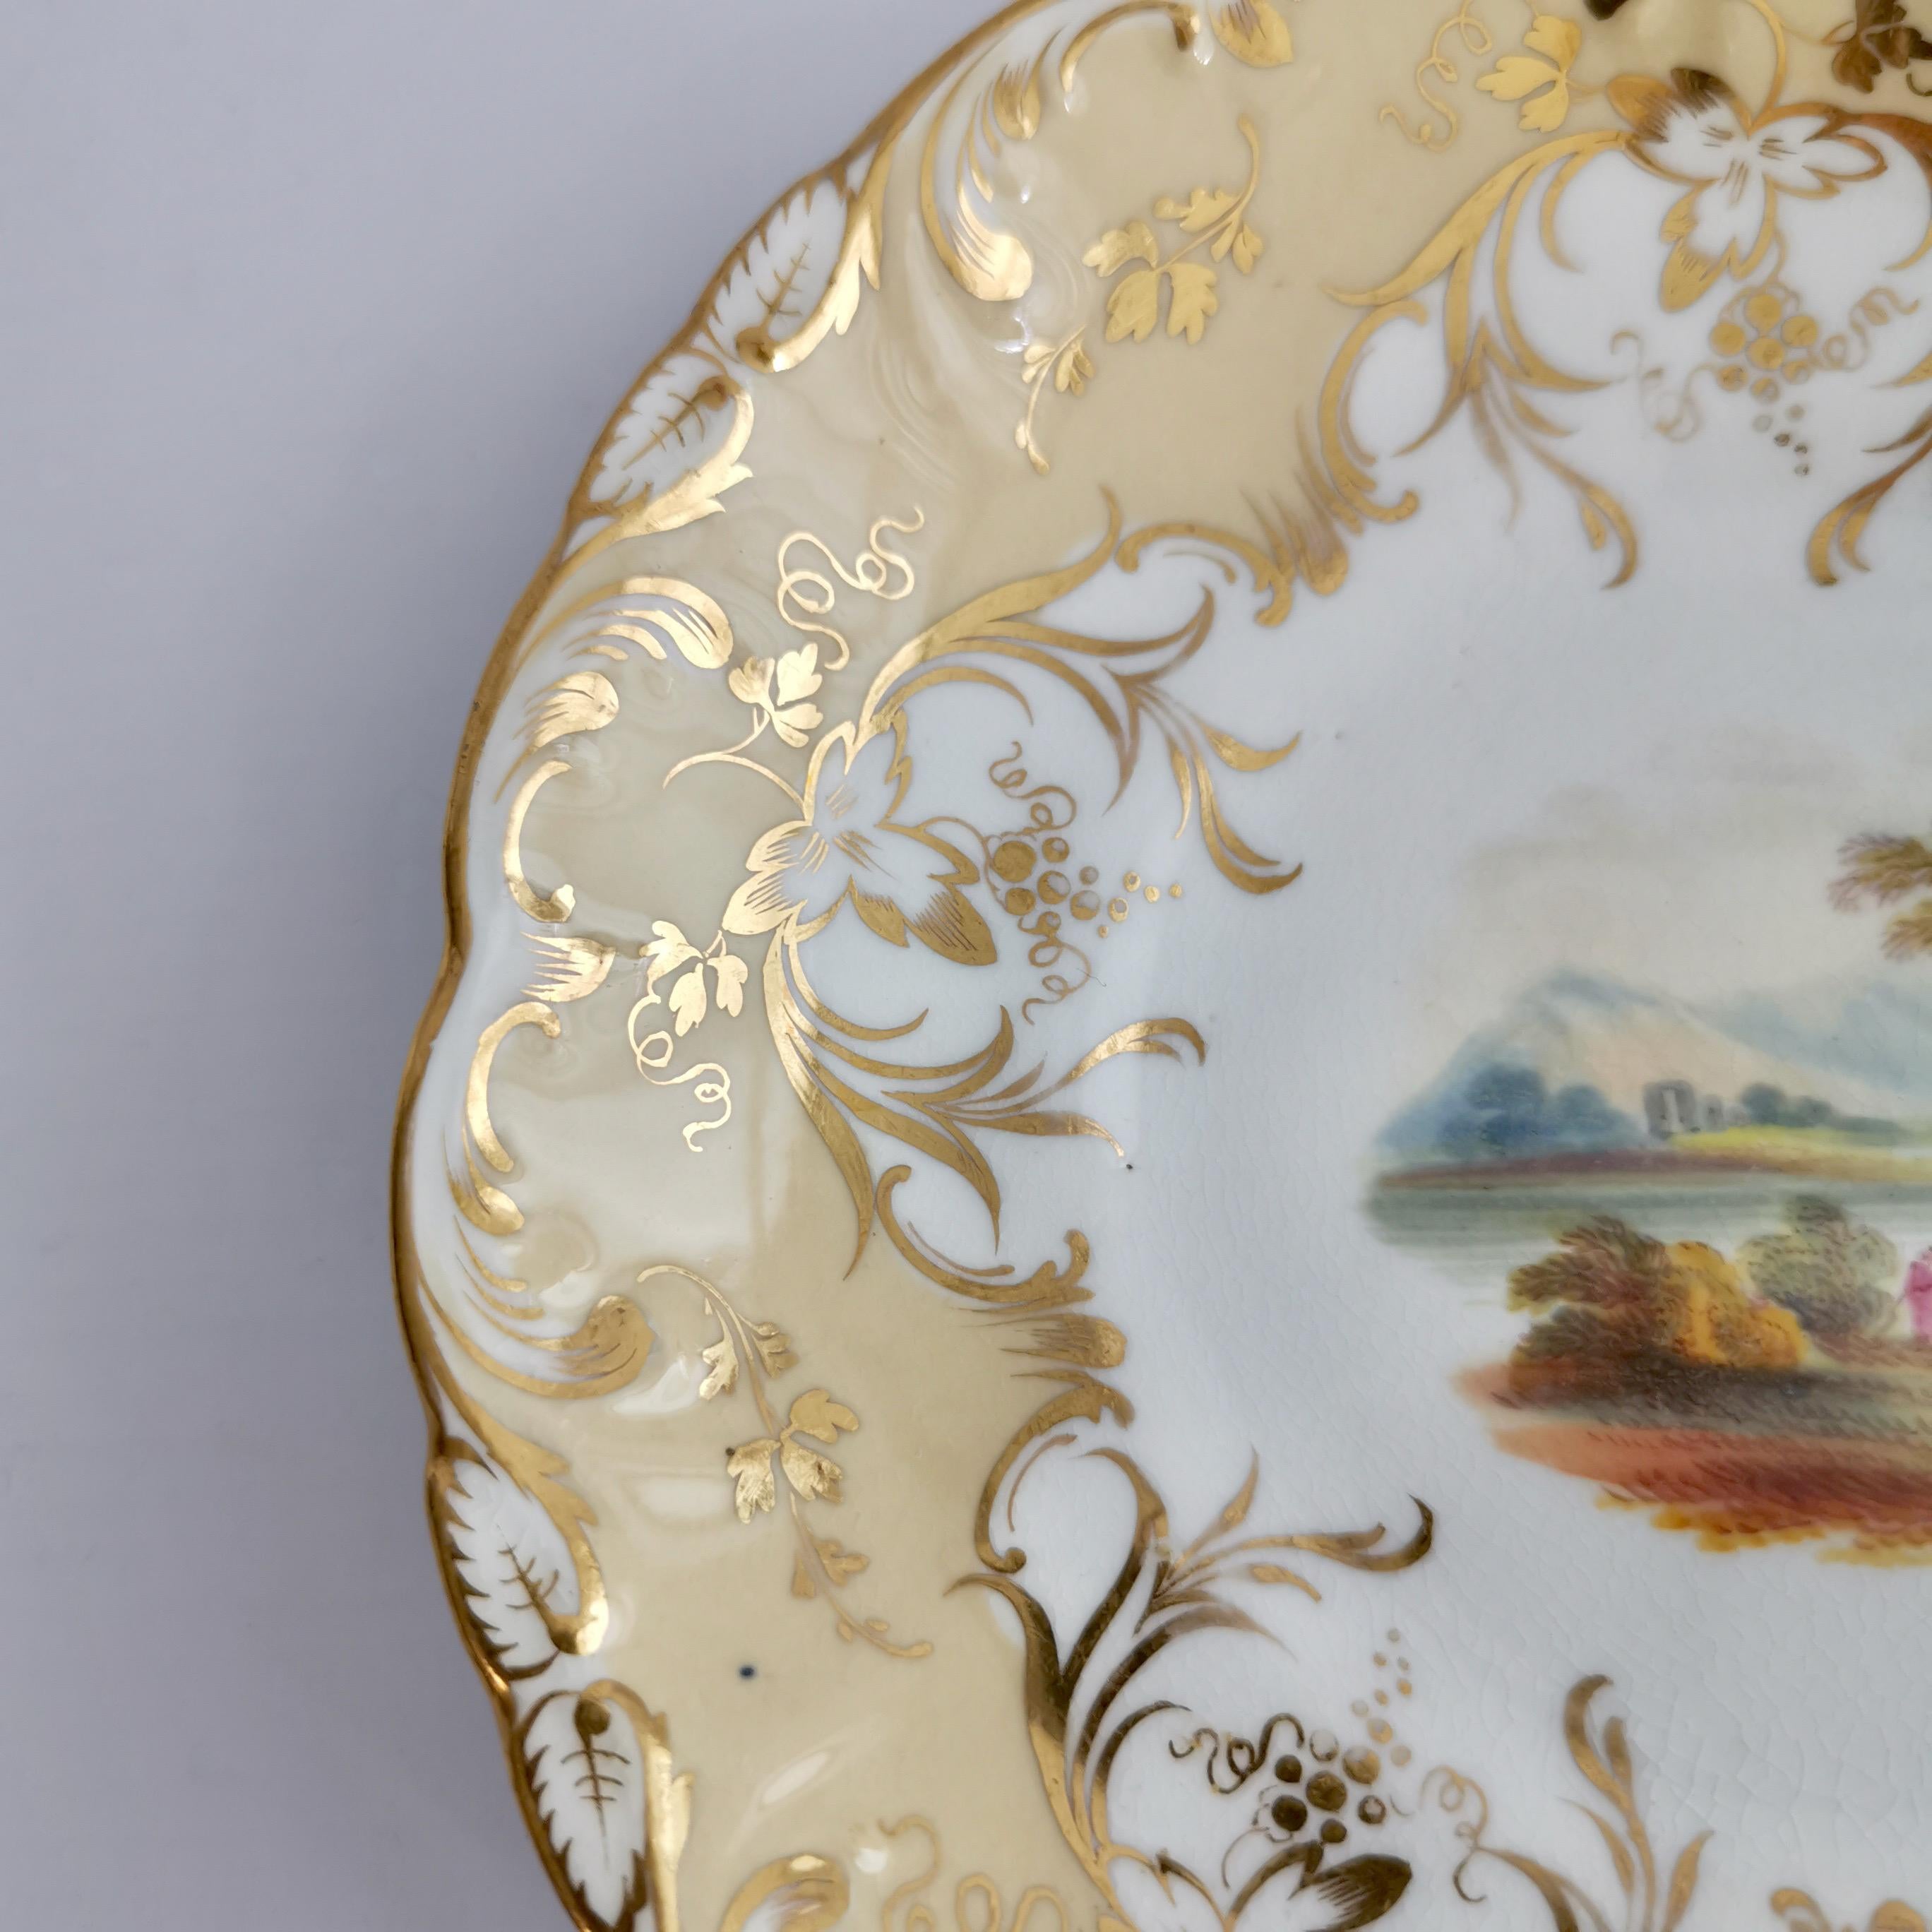 Coalport Porcelain Teacup, Beige with Landscapes, Rococo Revival, ca 1840 For Sale 1